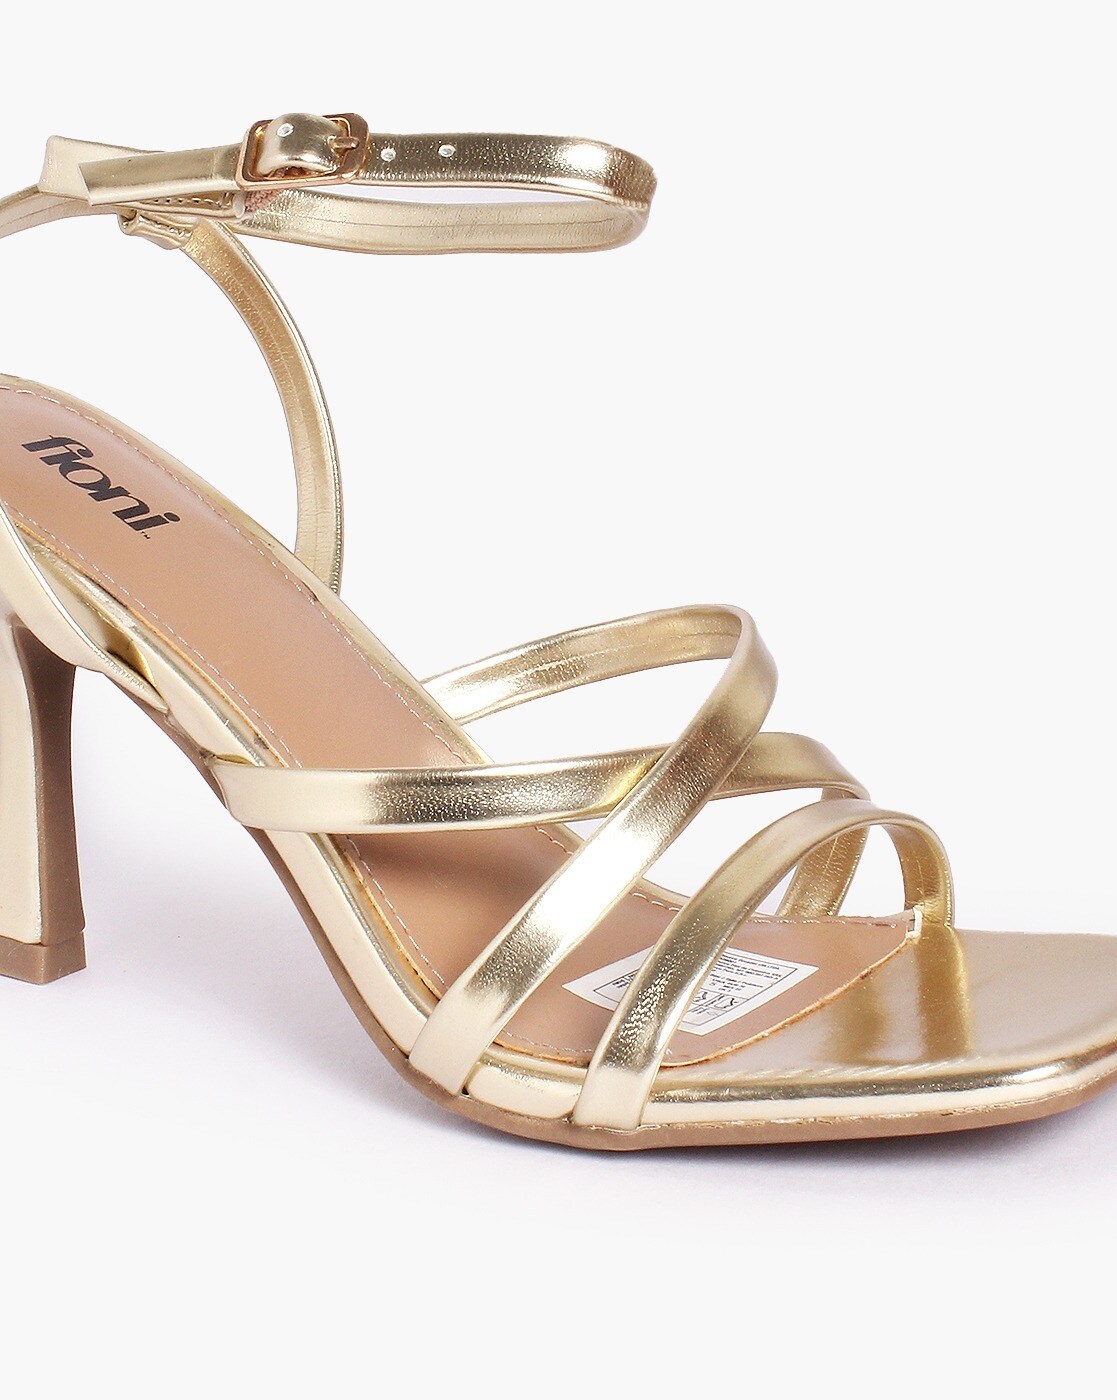 Gold High Heels - Rhinestone High Heel Sandals - Metallic Heels - Lulus